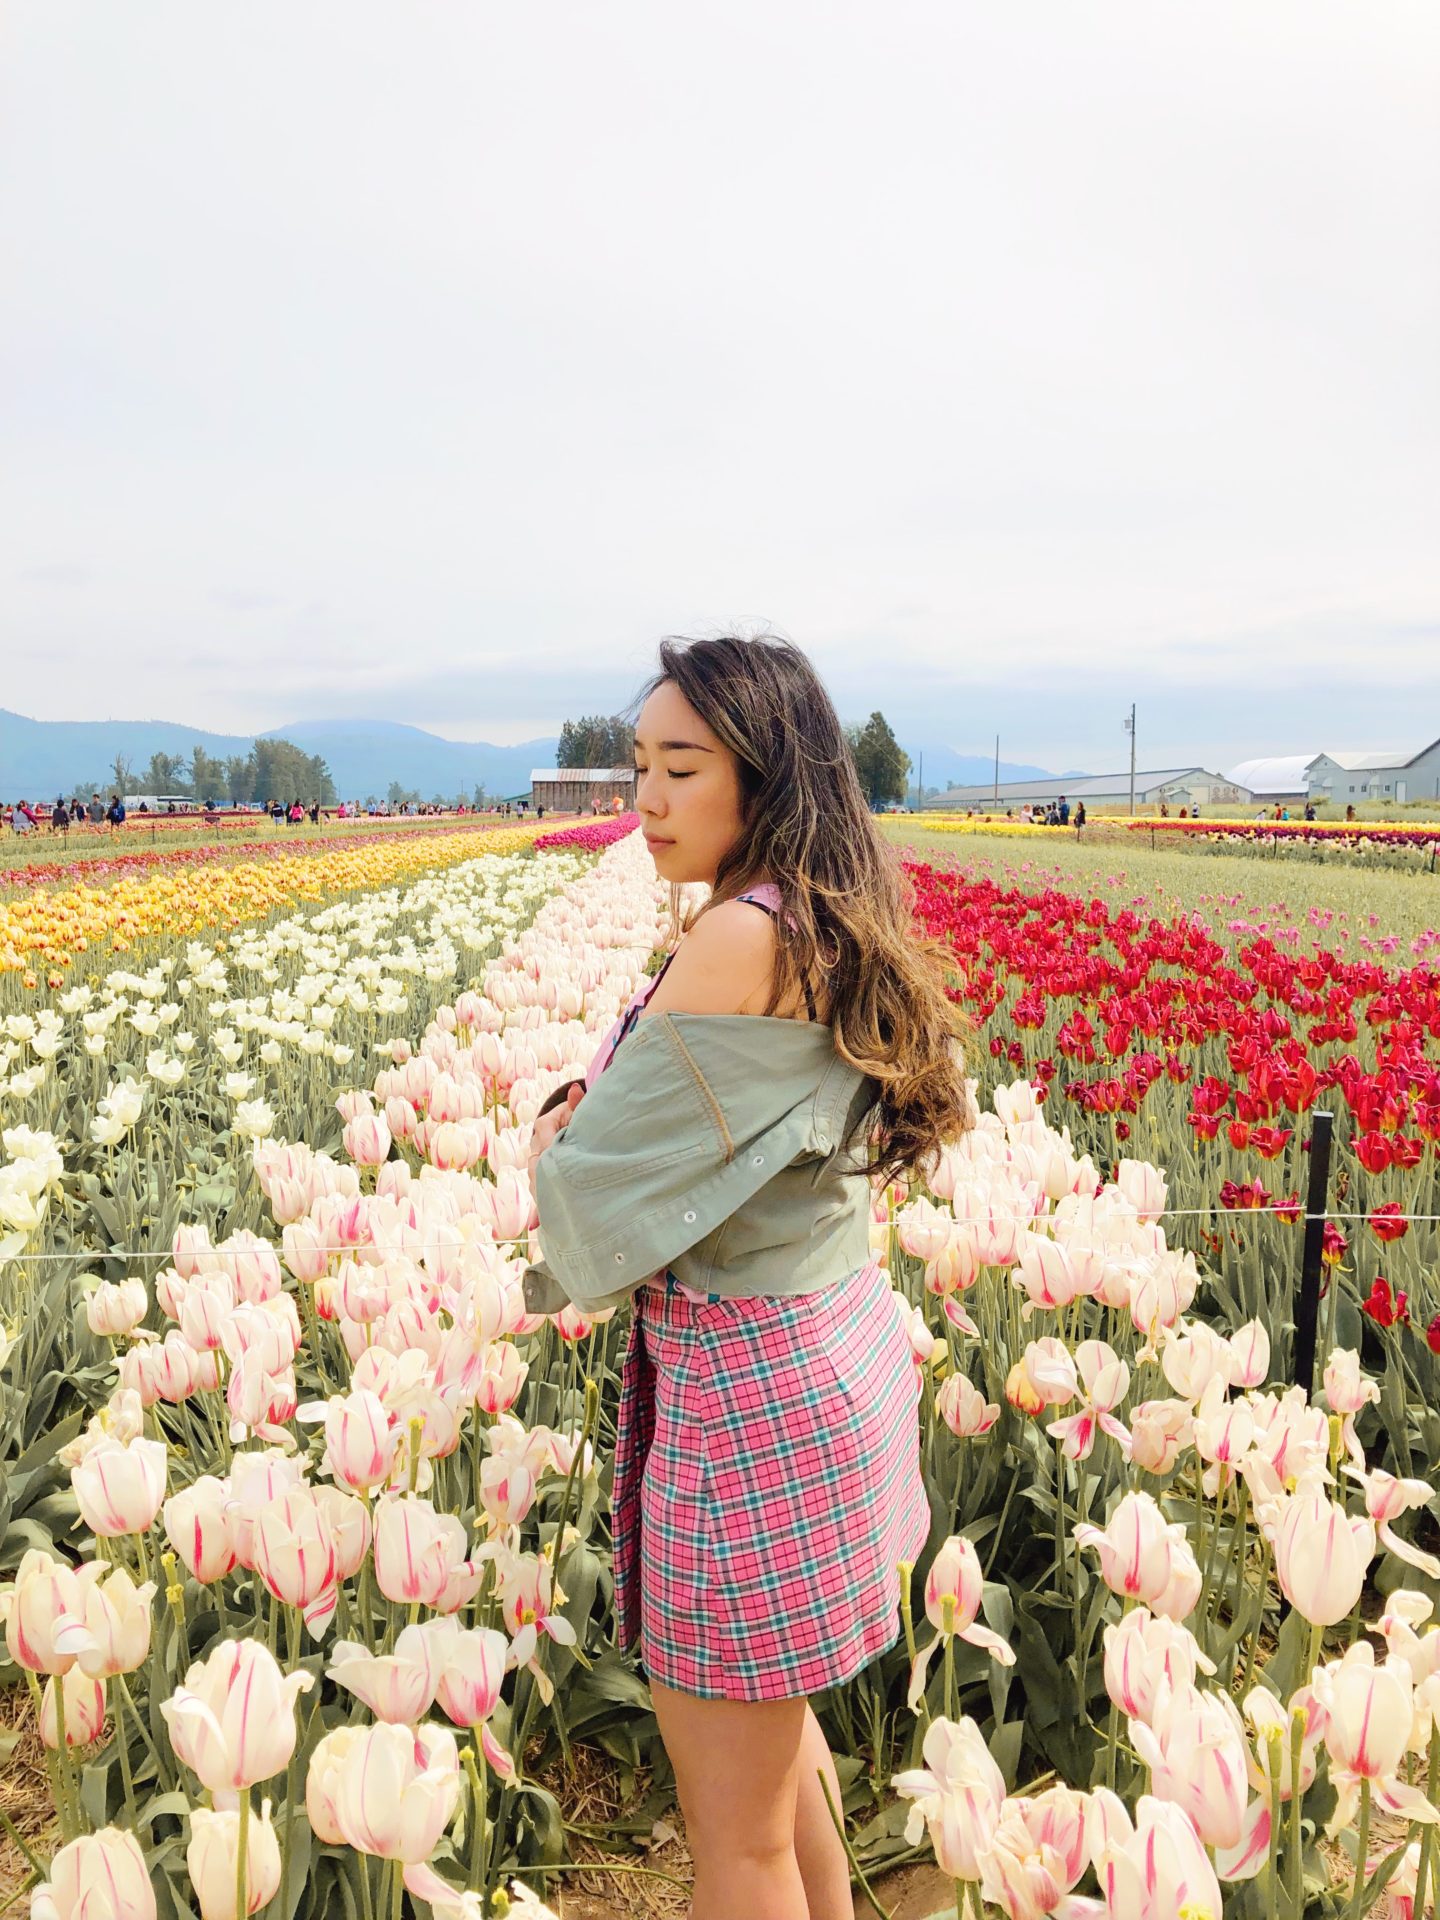 Spending my 27th birthday in the tulip fields 